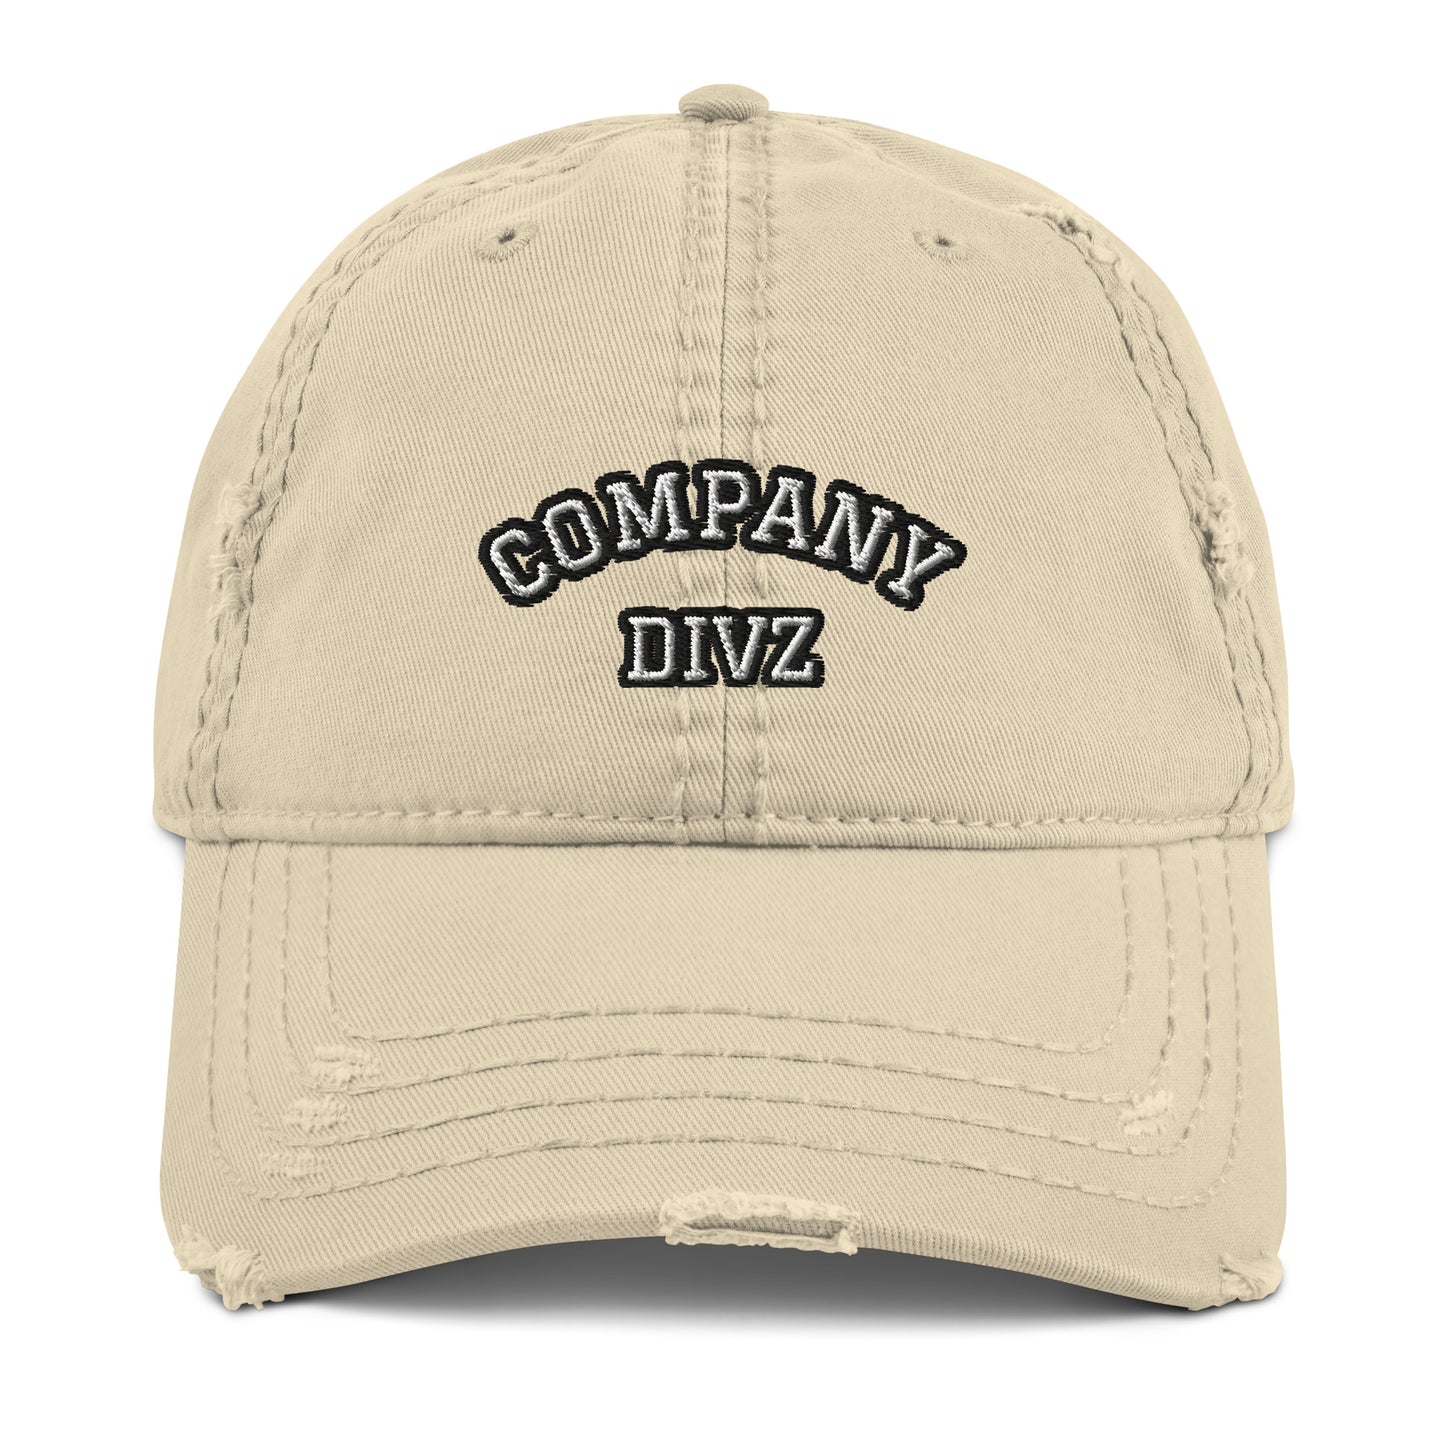 Divz Company Cap